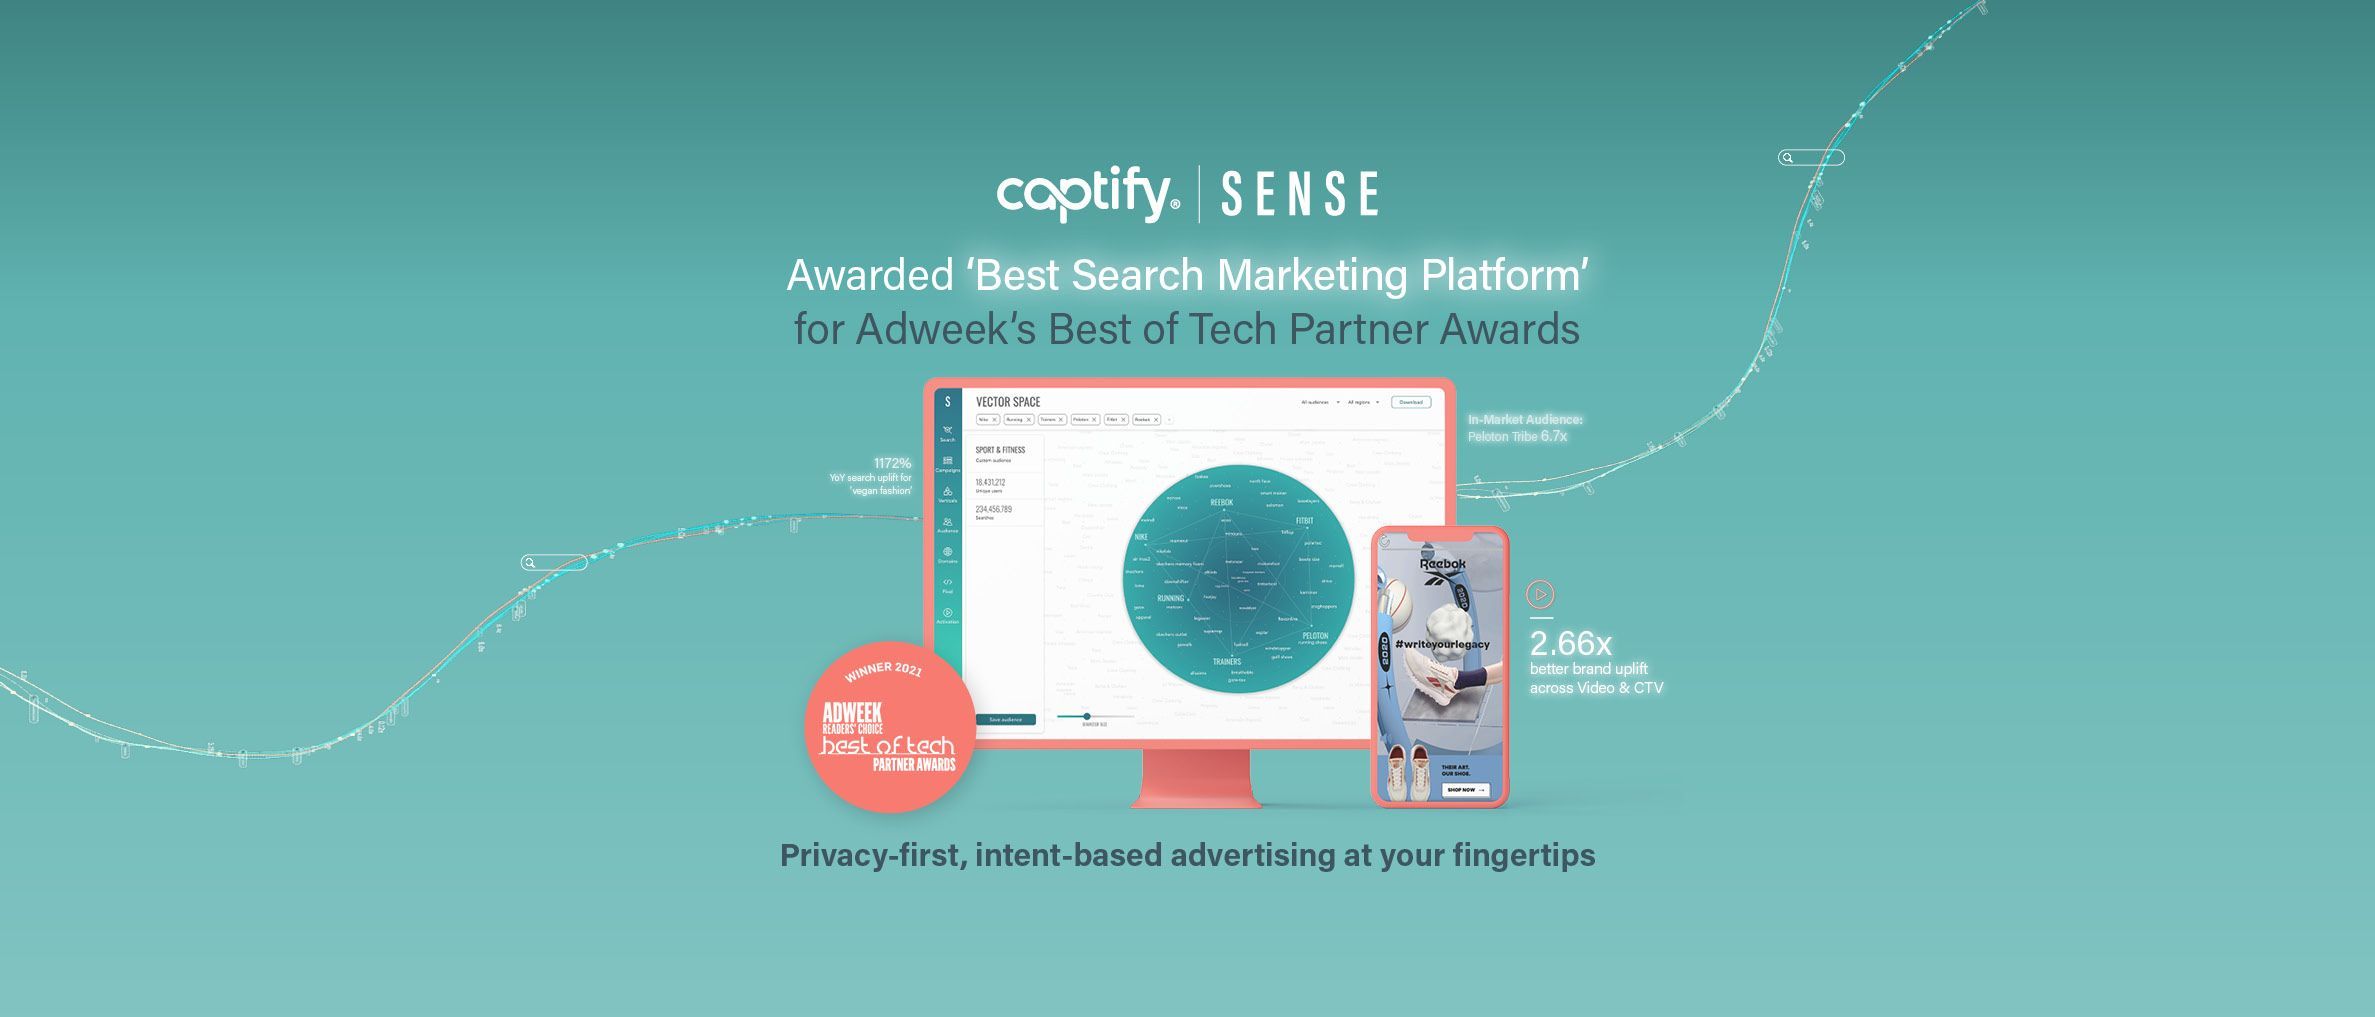 Captify’s Sense Awarded ‘Best Search Marketing Platform’ For Adweek’s Best Of Tech Partner Awards